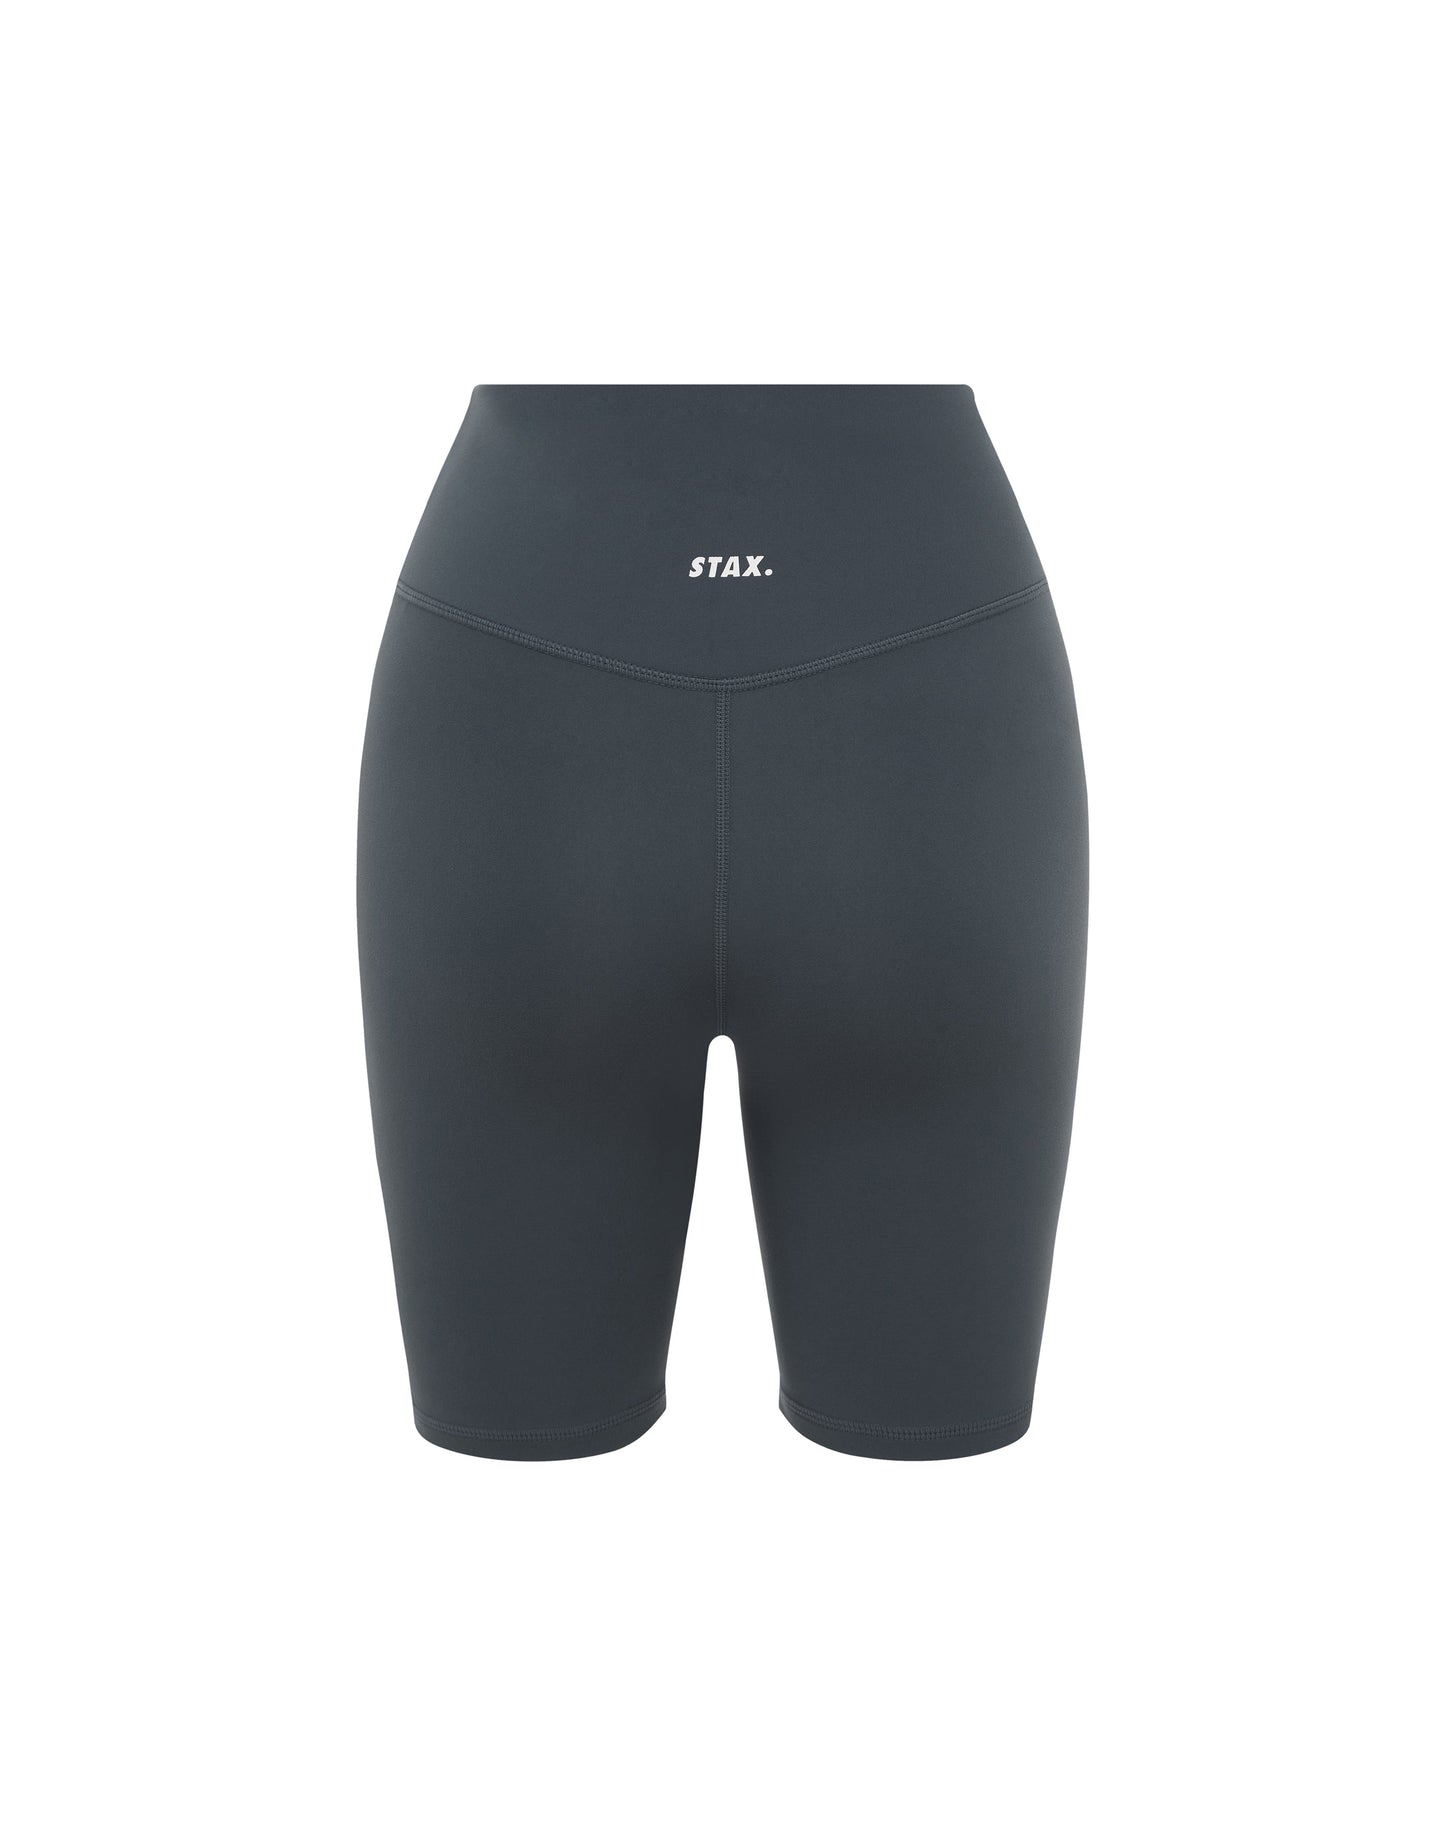 STAX. Original Bike Shorts NANDEX ™ - Dark Grey